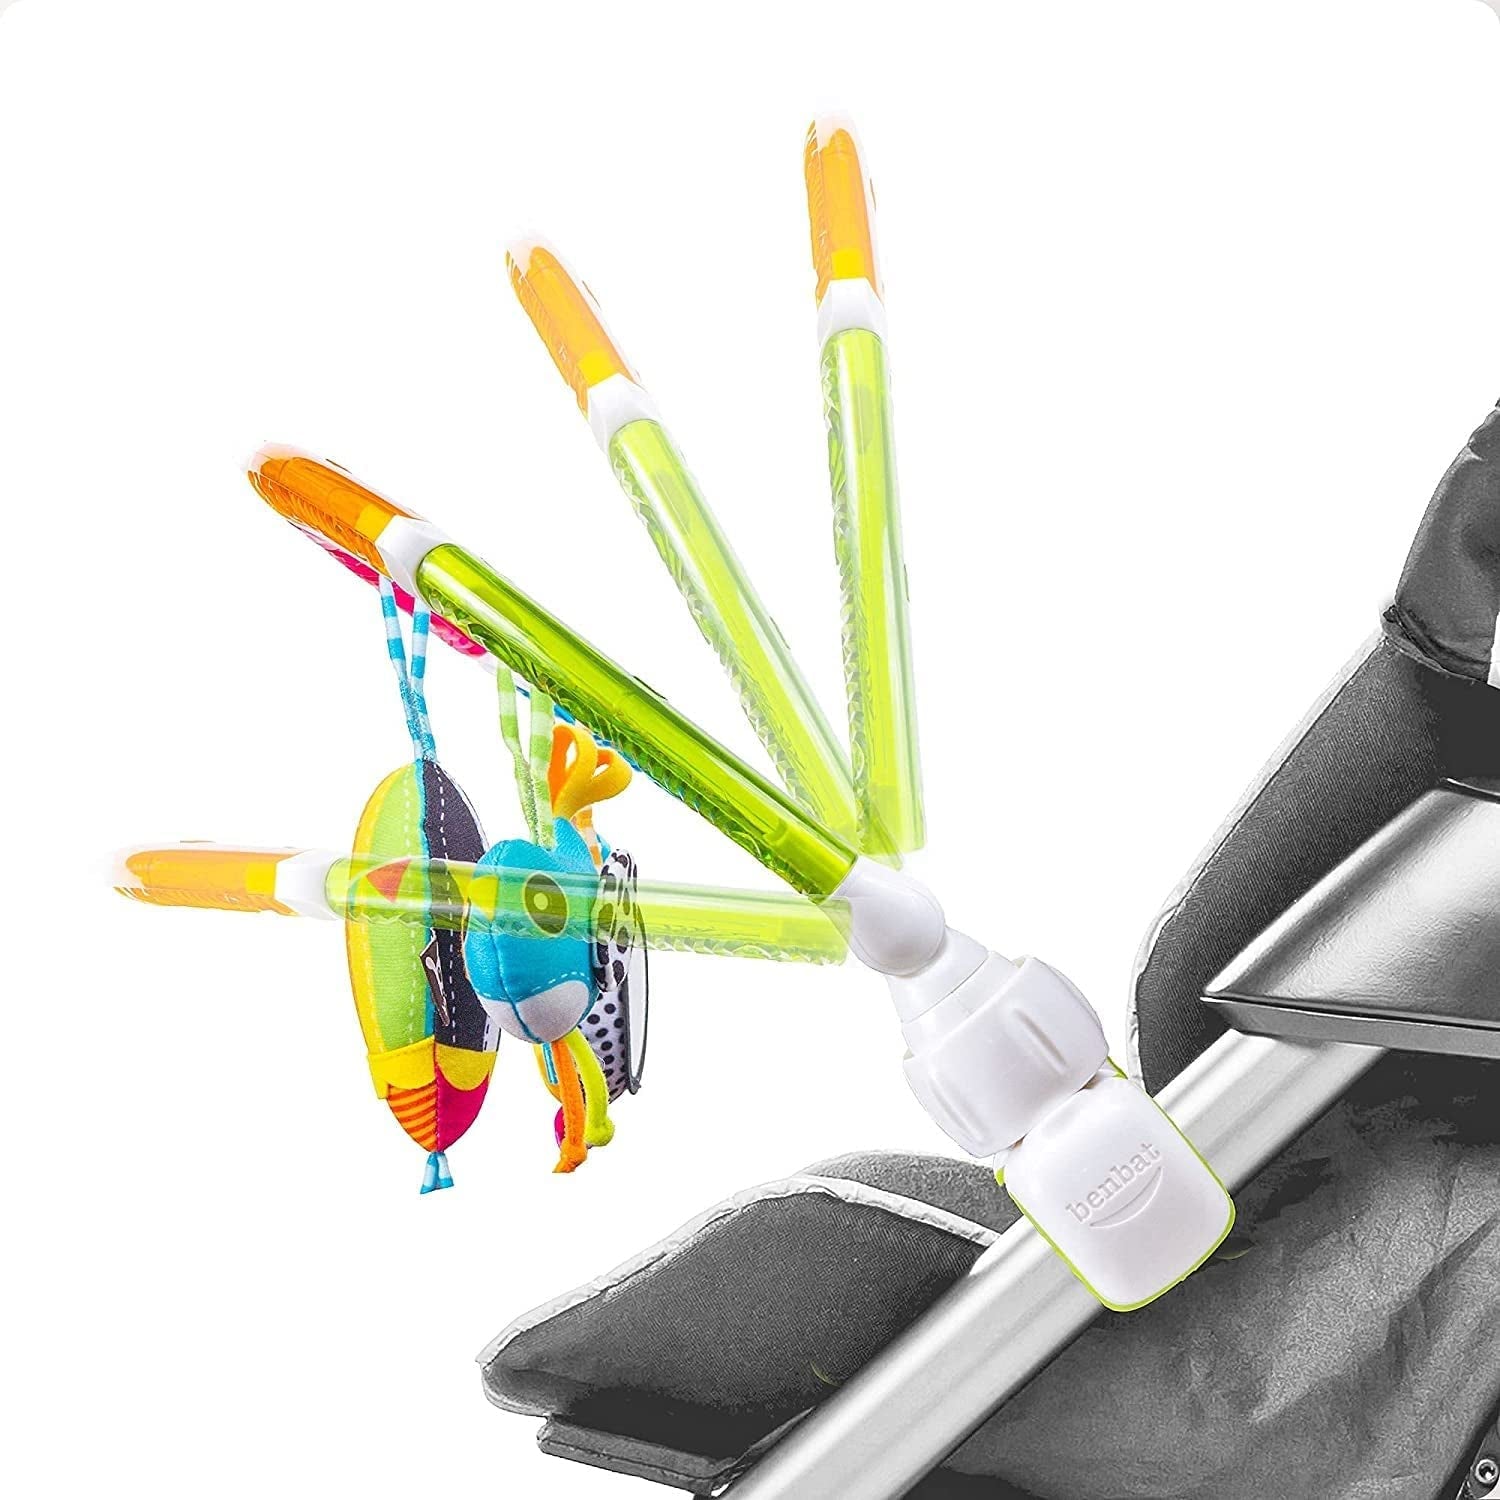 Baby Stroller Arch Toy. Benbat Rainbow Dazzle Friends Play Bar. Fun Newborns Sensory Activity, Adjustable for Bouncers and Car Seat.